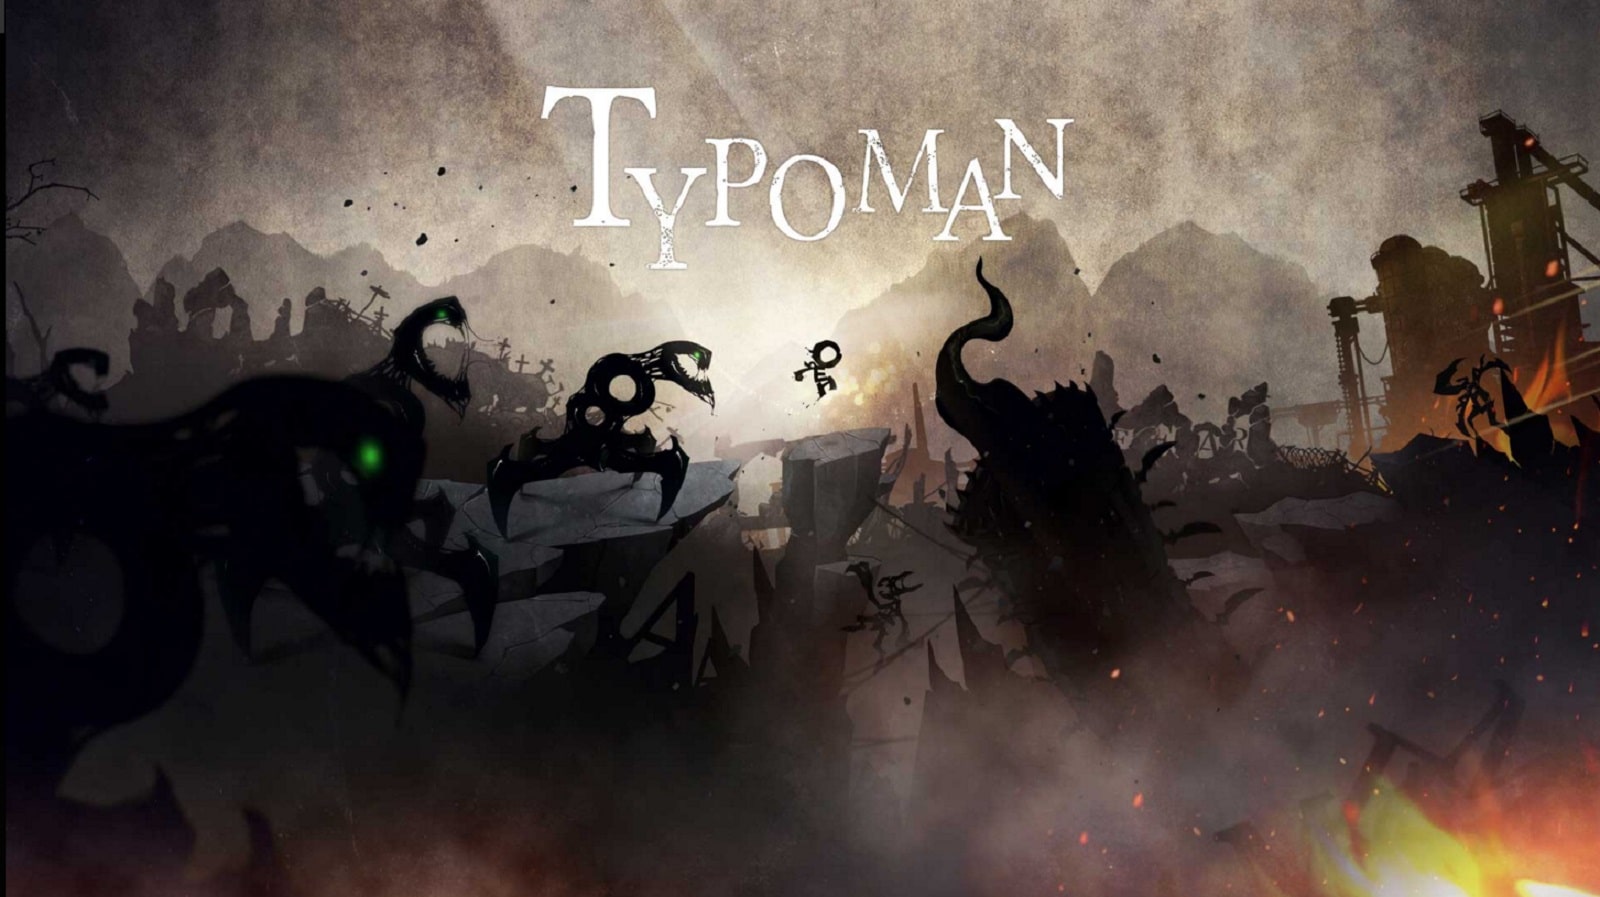 Typoman Fearsome Enemy Gameplay Screenshot Wii U - 1600 x 897 jpeg 302kB